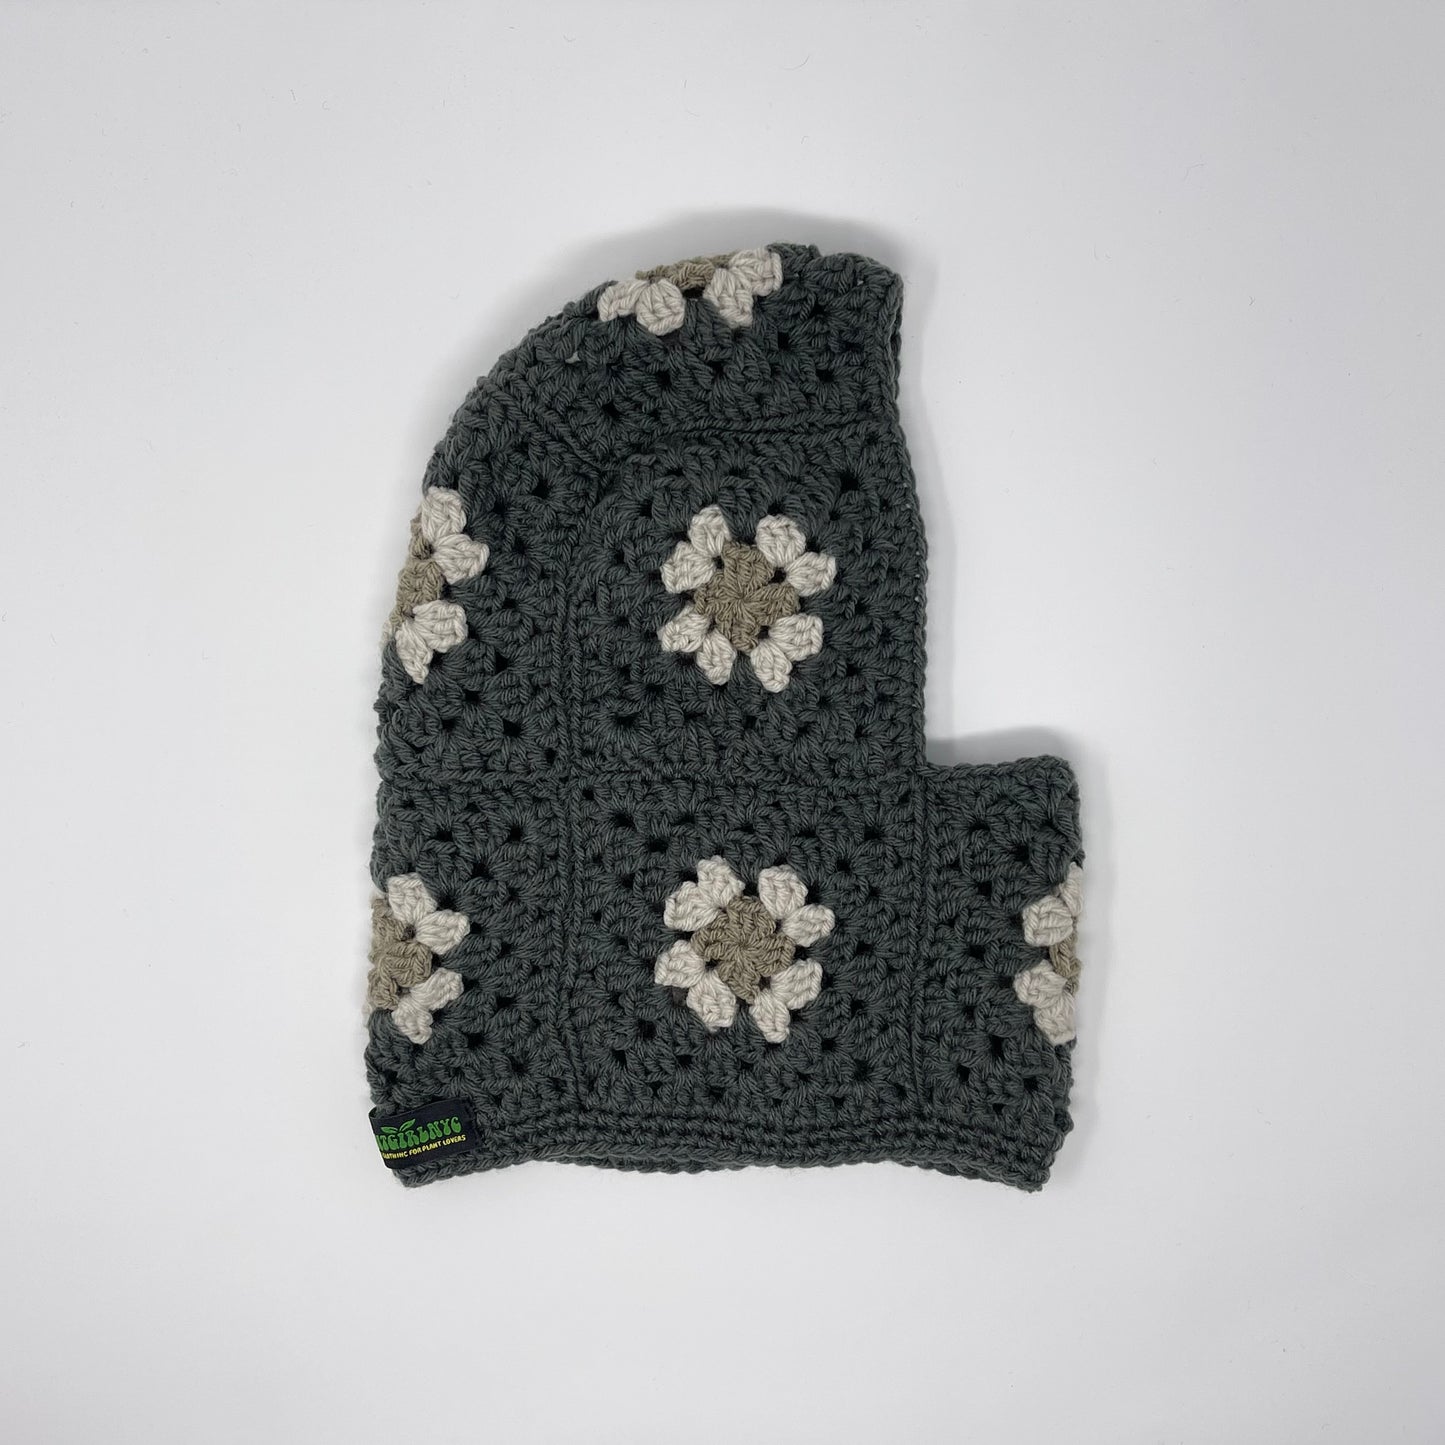 Crochet Balaclava - Dark Grey with Grey tone Flowers